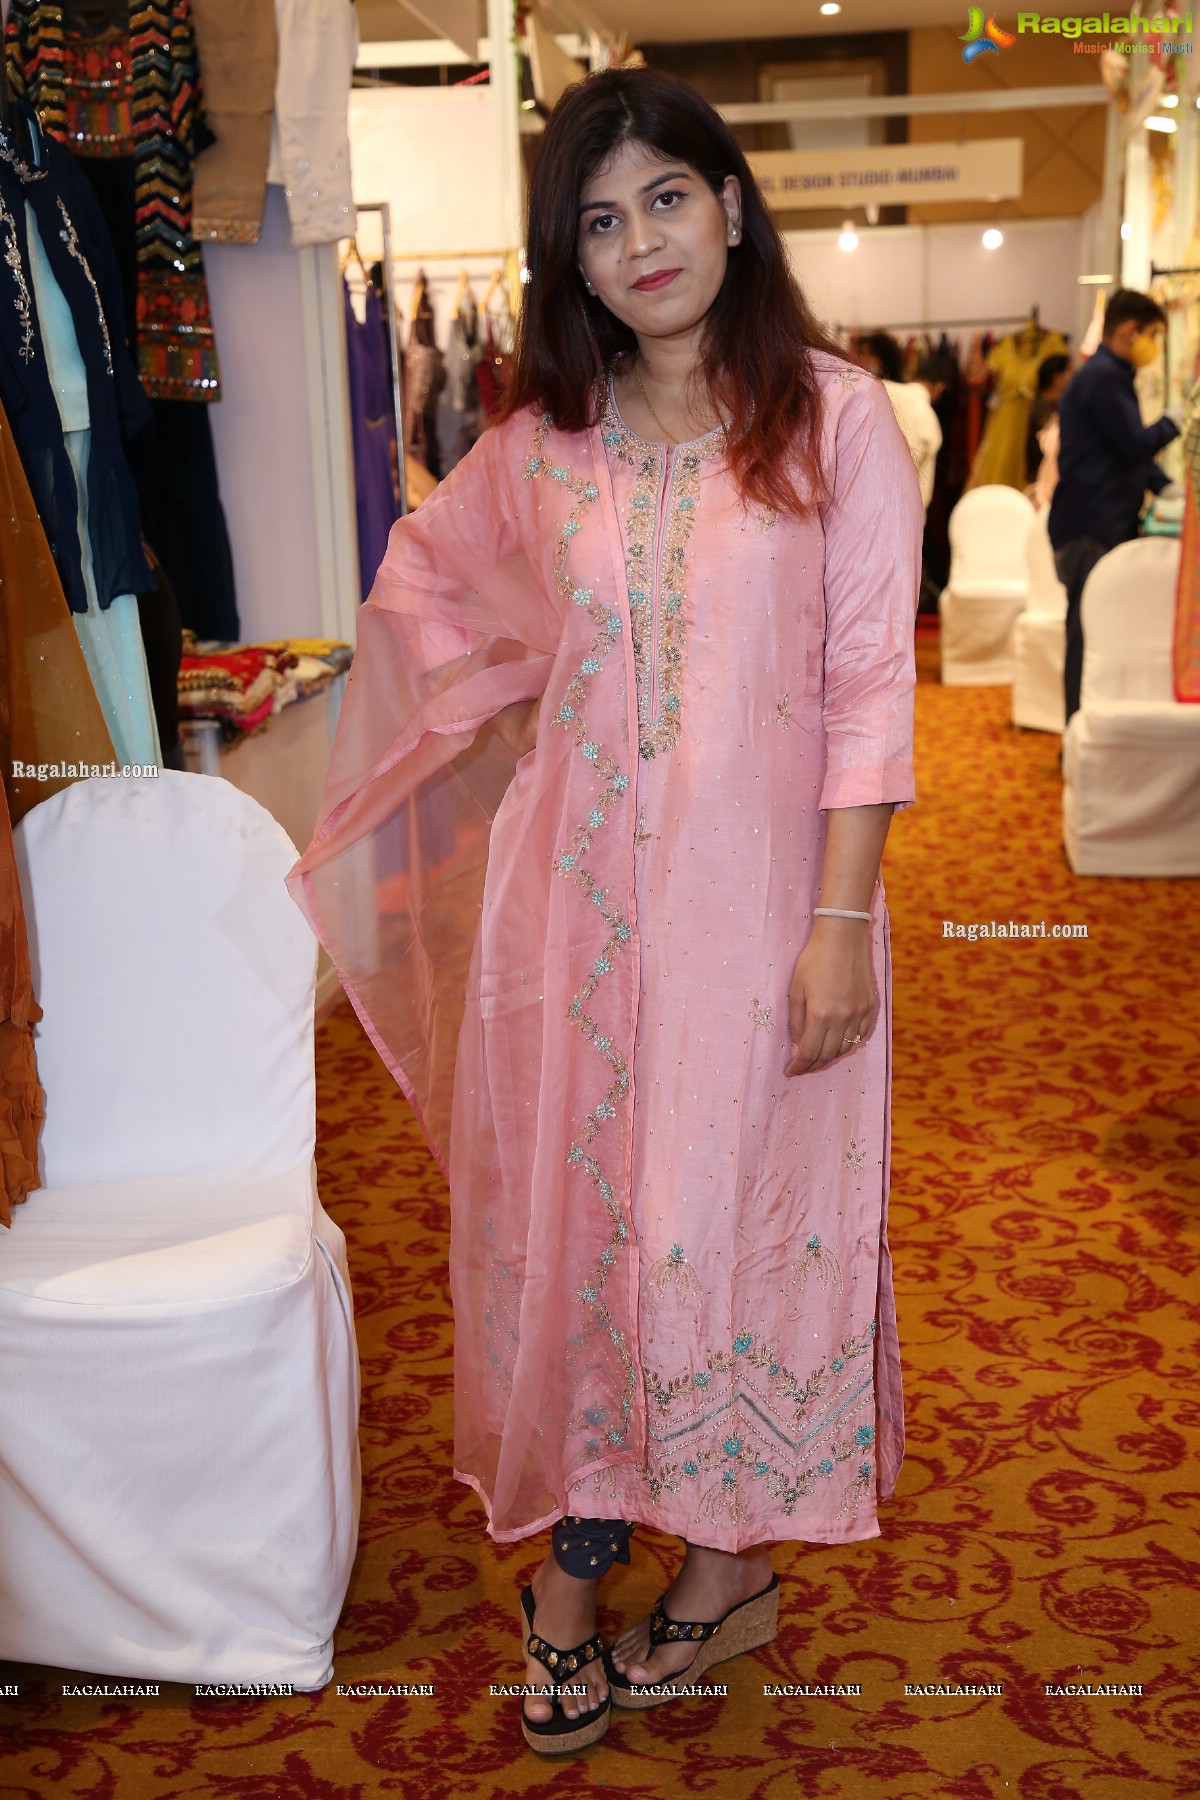 Arkayam Fashion & Lifestyle Exhibition April 2021 Begins at Taj Deccan